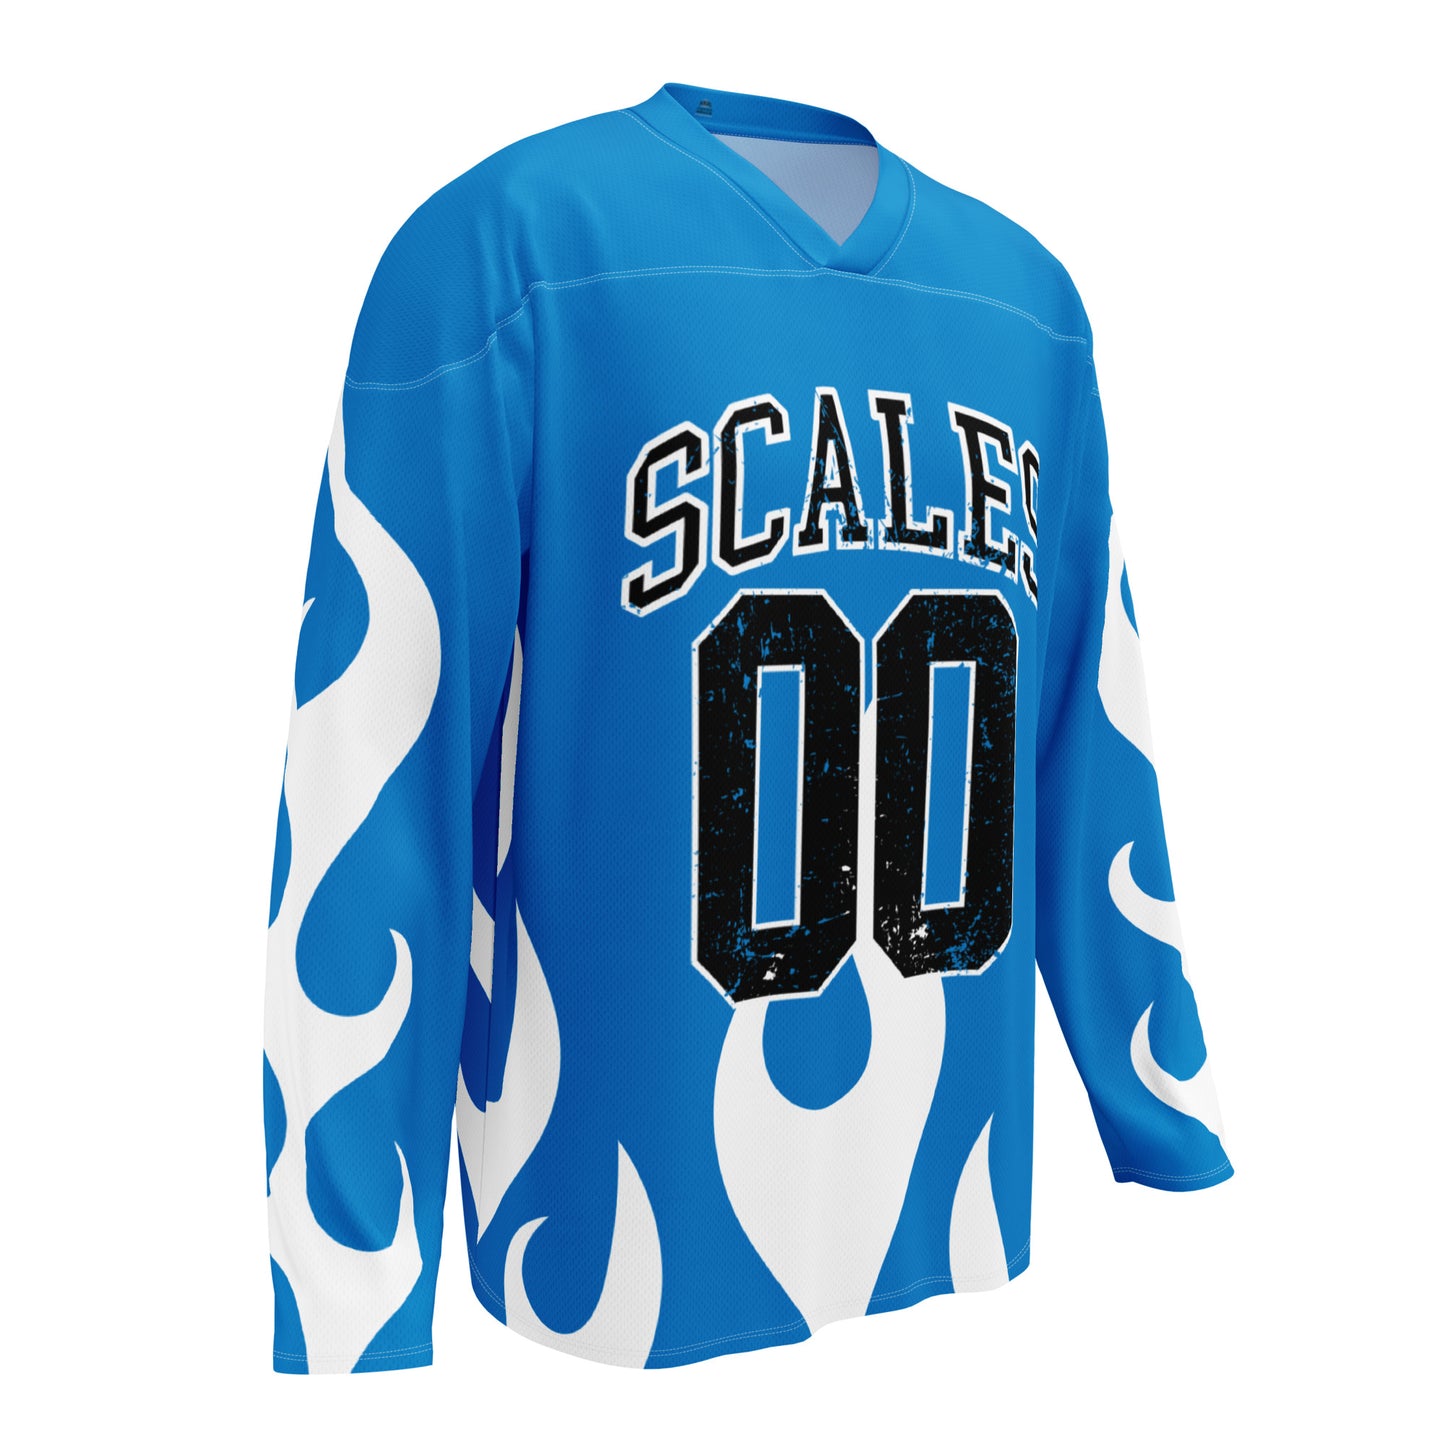 Blue Scales hockey jersey